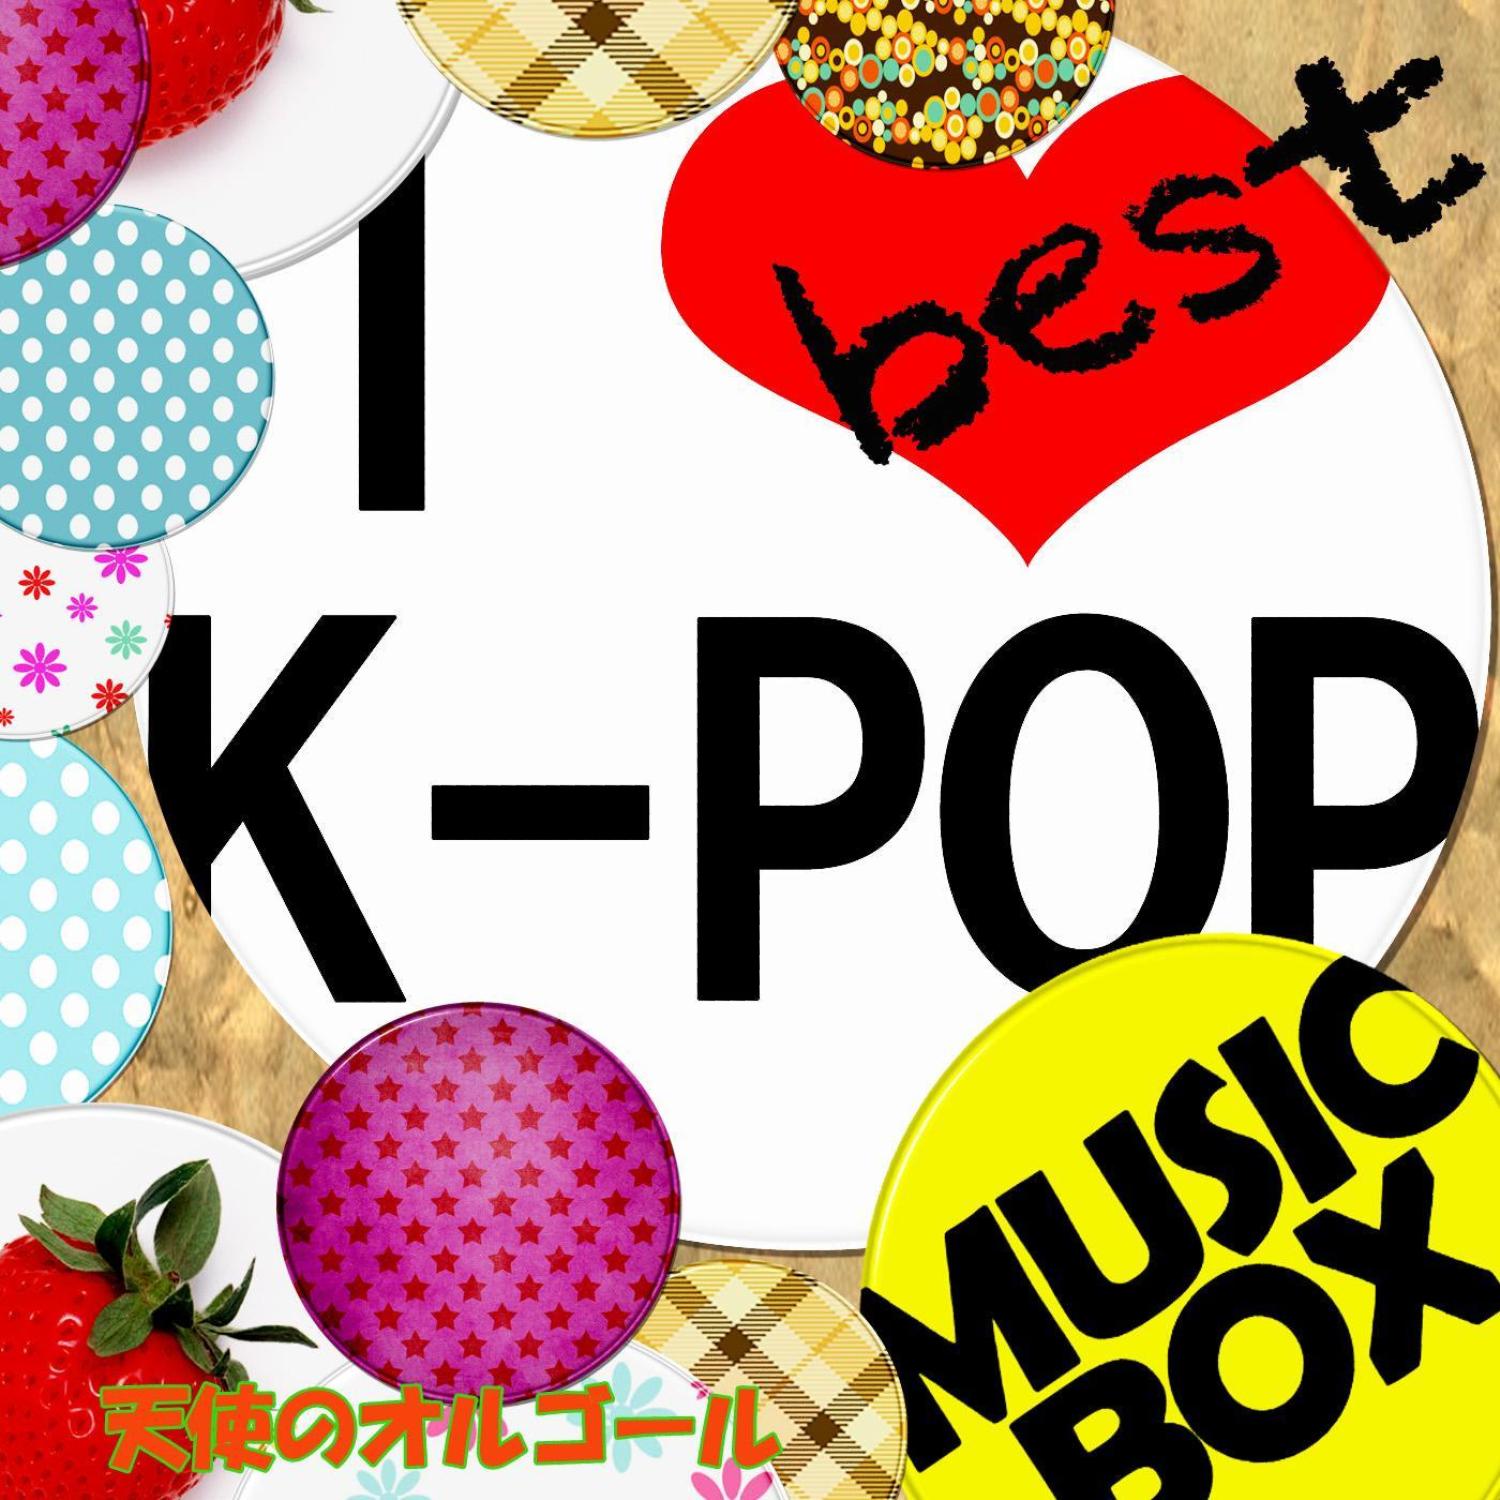 K-POP best music box